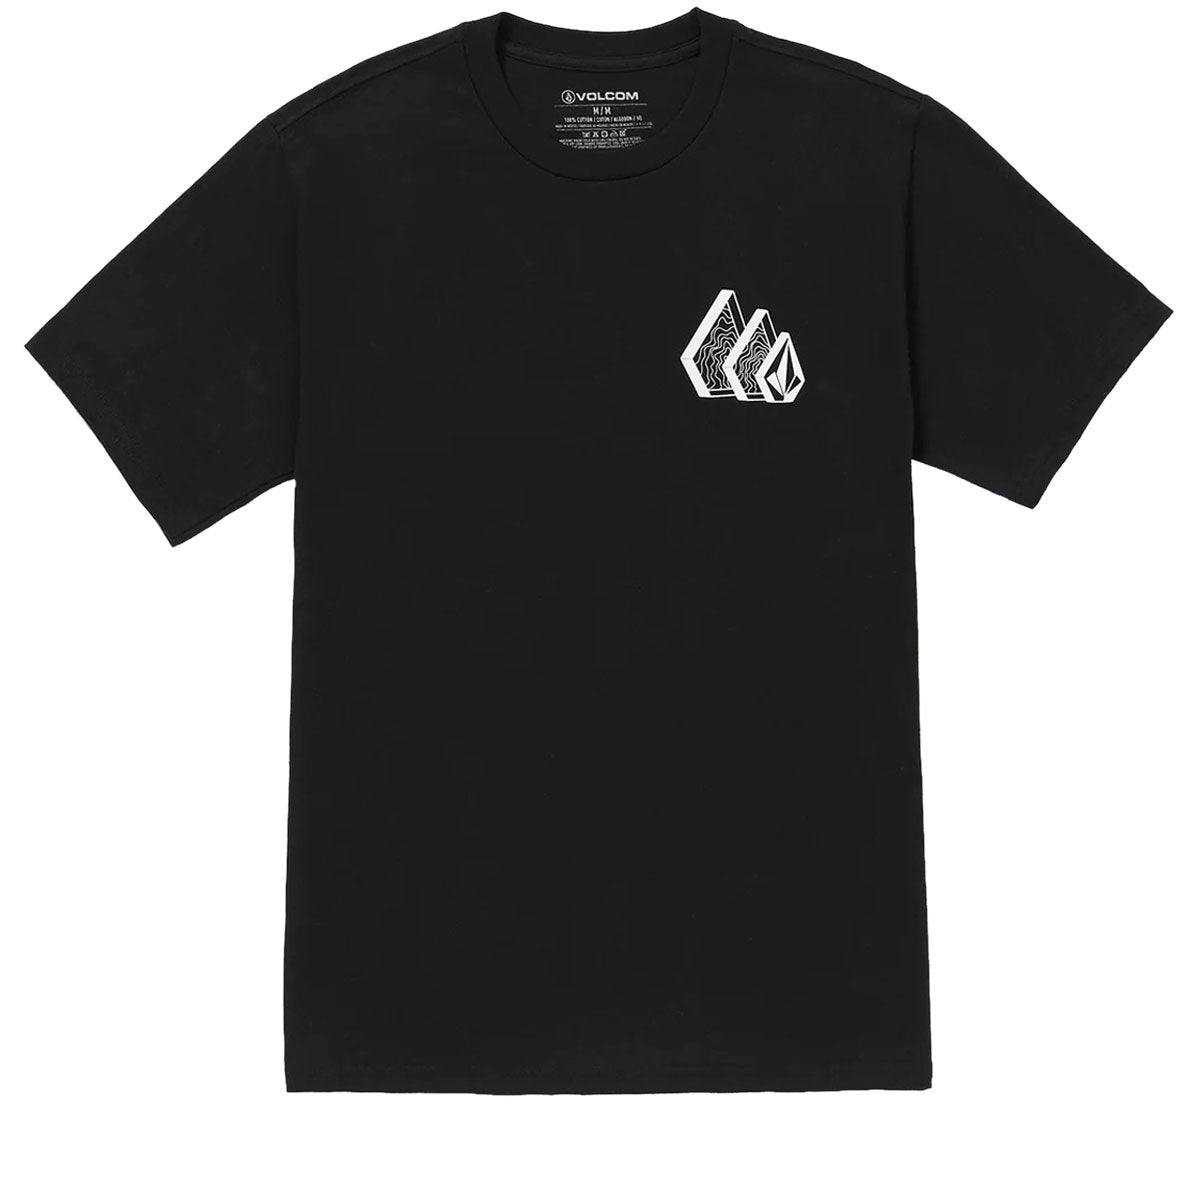 Volcom Repeater T-Shirt - Black image 1